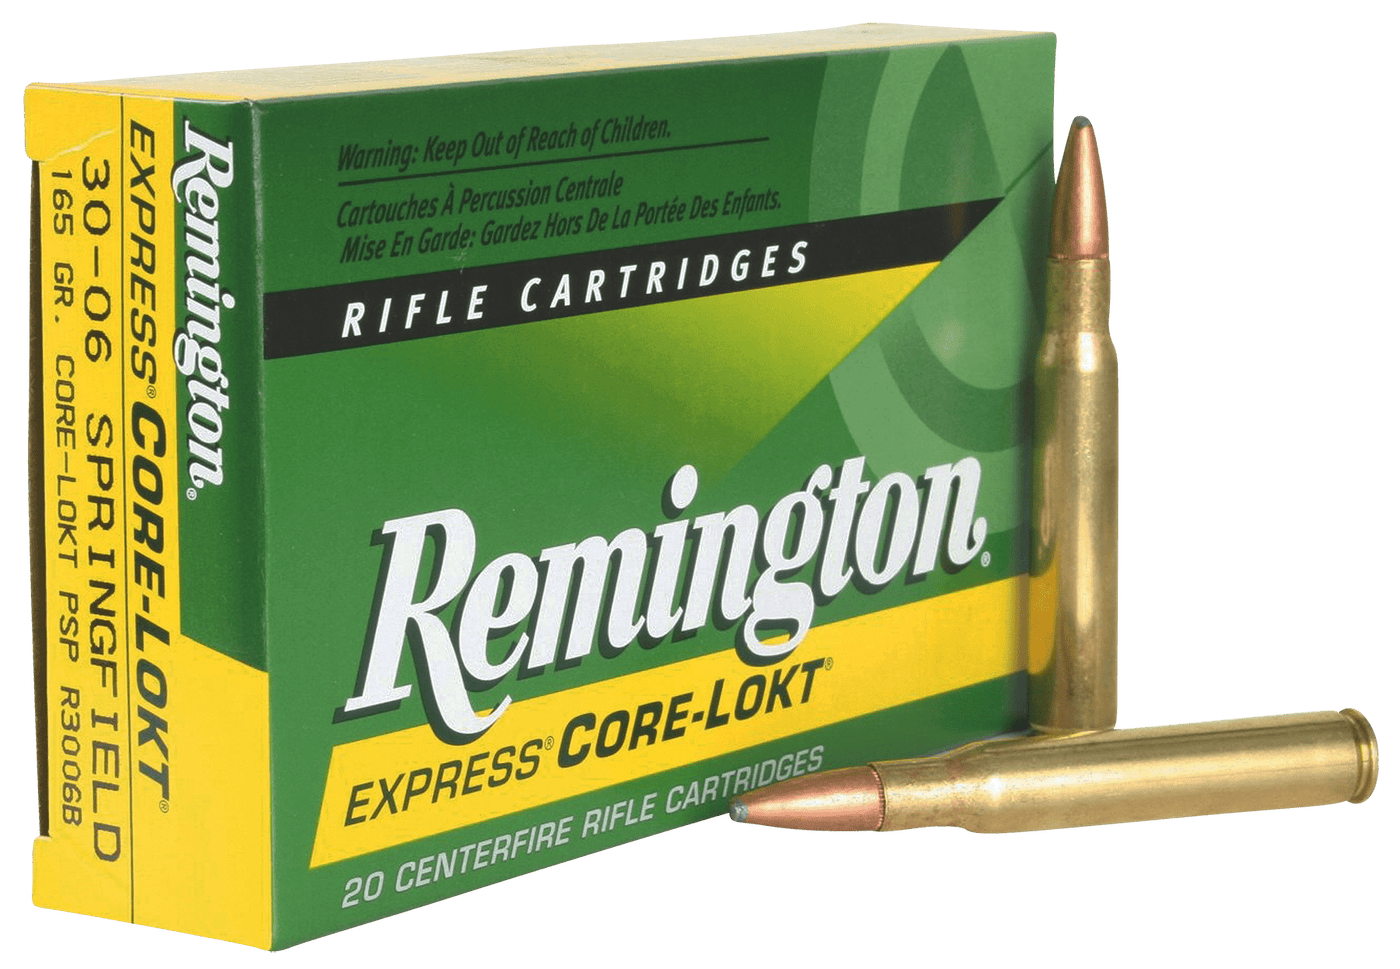 Remington Ammunition Remington Core-lokt Centerfire Rifle Ammo 30-06 Sprg. 165 Gr. Core-lokt Psp 20 Rd. Ammo